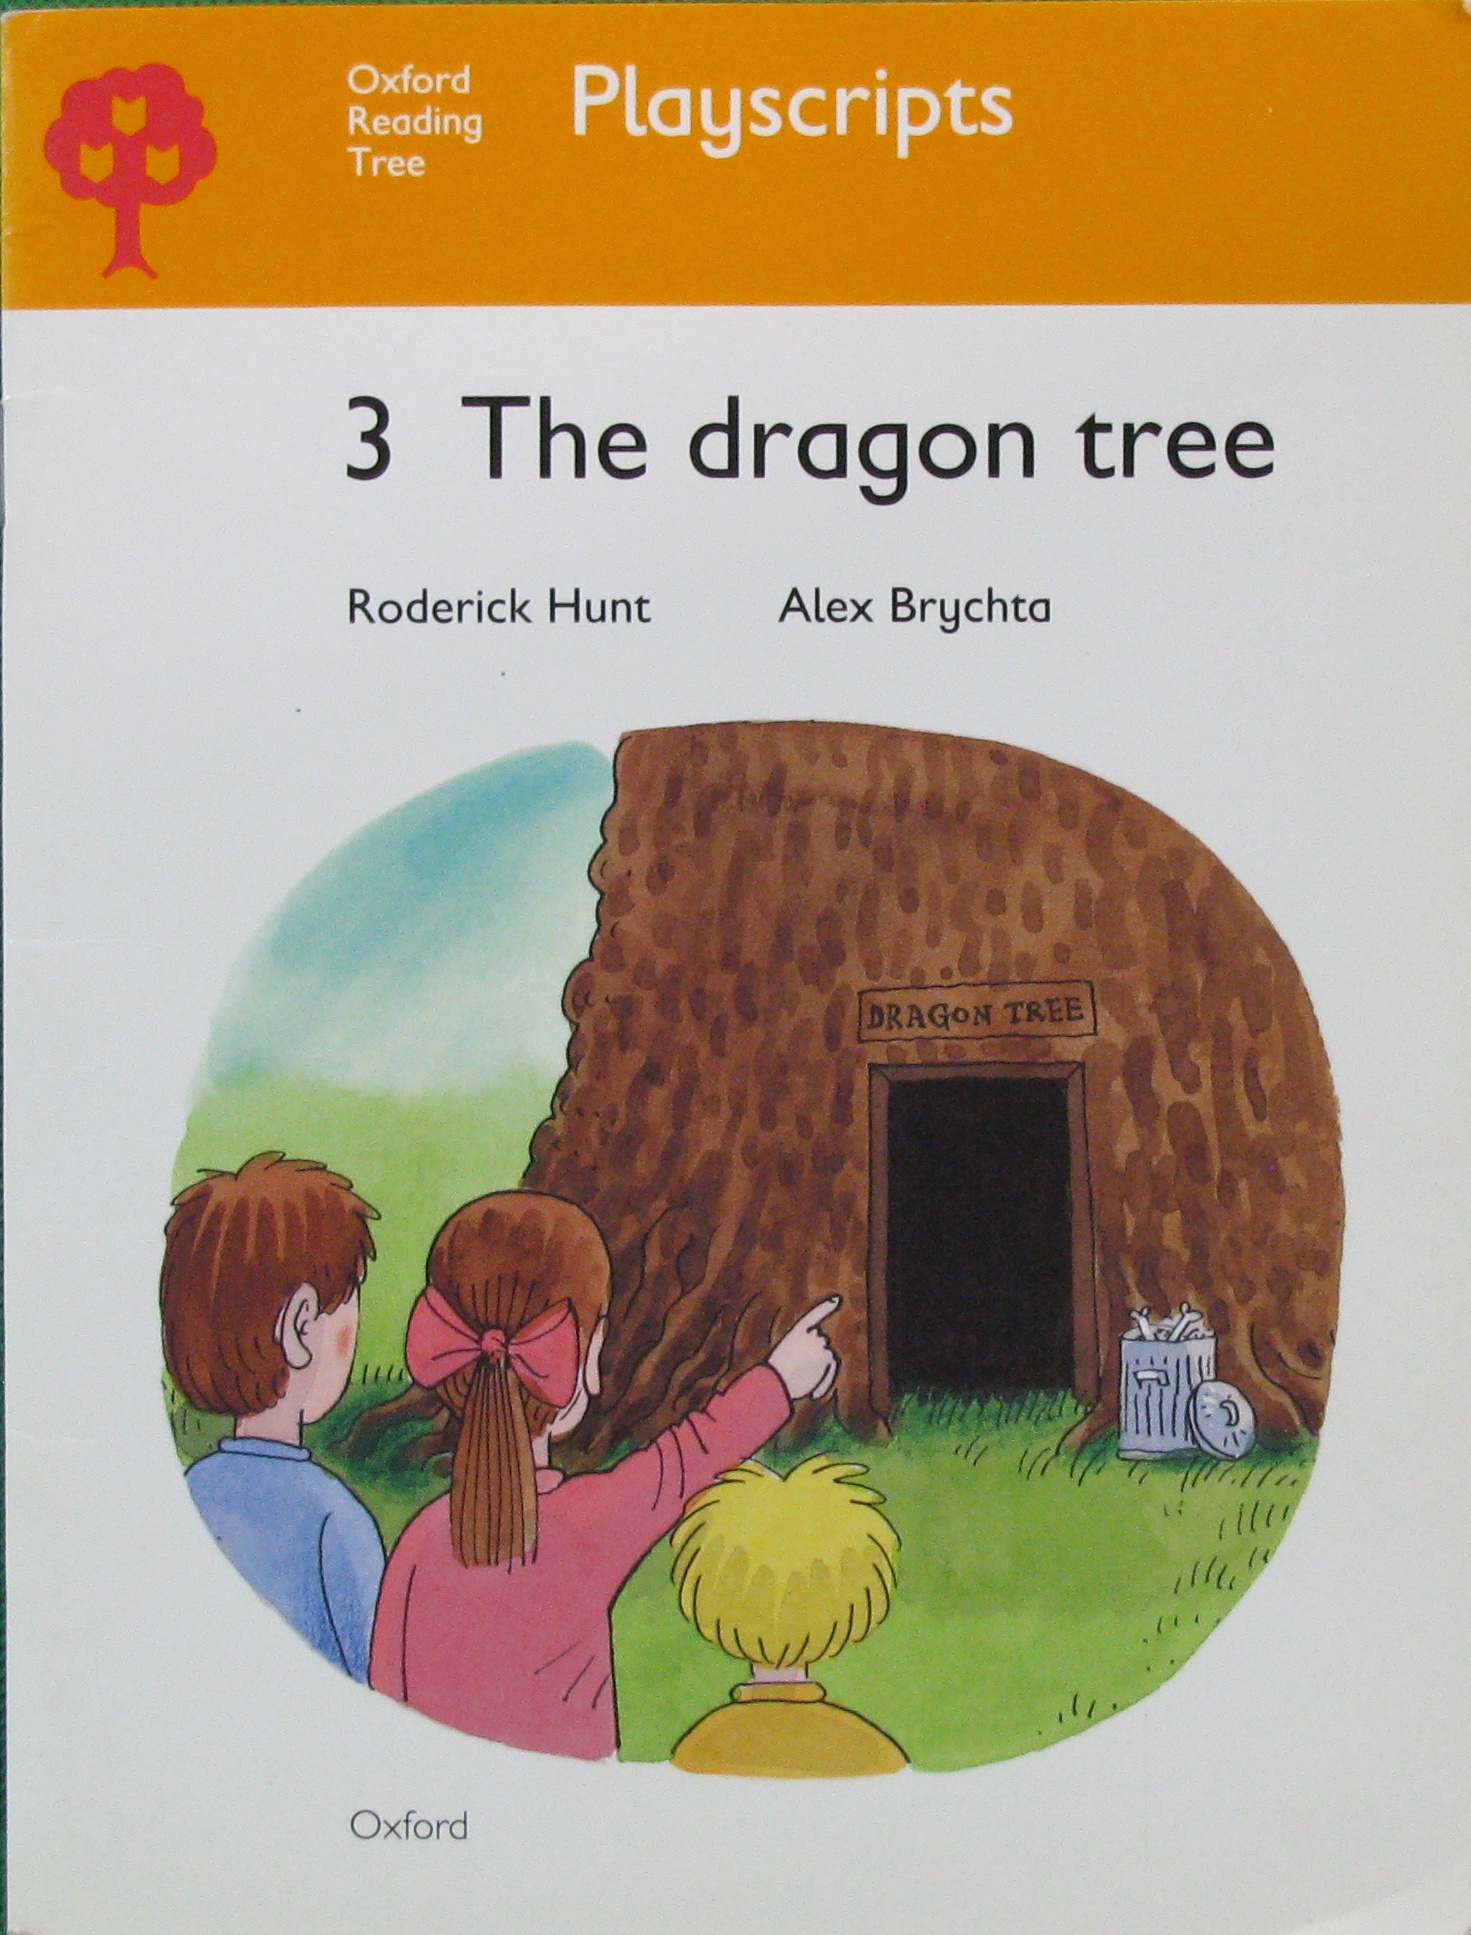 Oxford Reading Tree: The dragon tree_文学_儿童图书_进口图书_进口书 